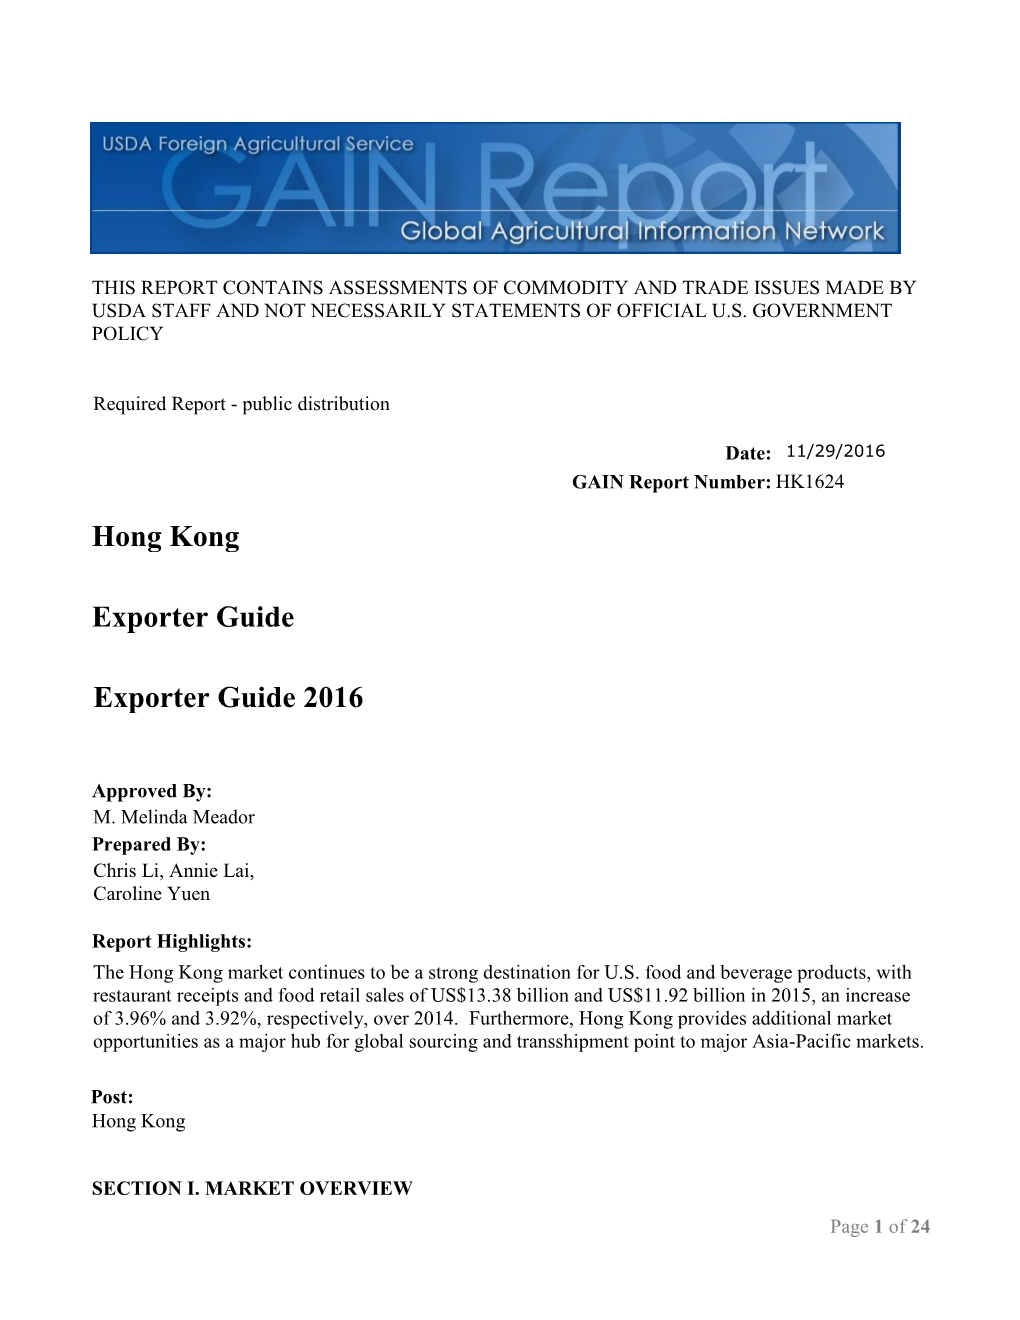 Exporter Guide Hong Kong